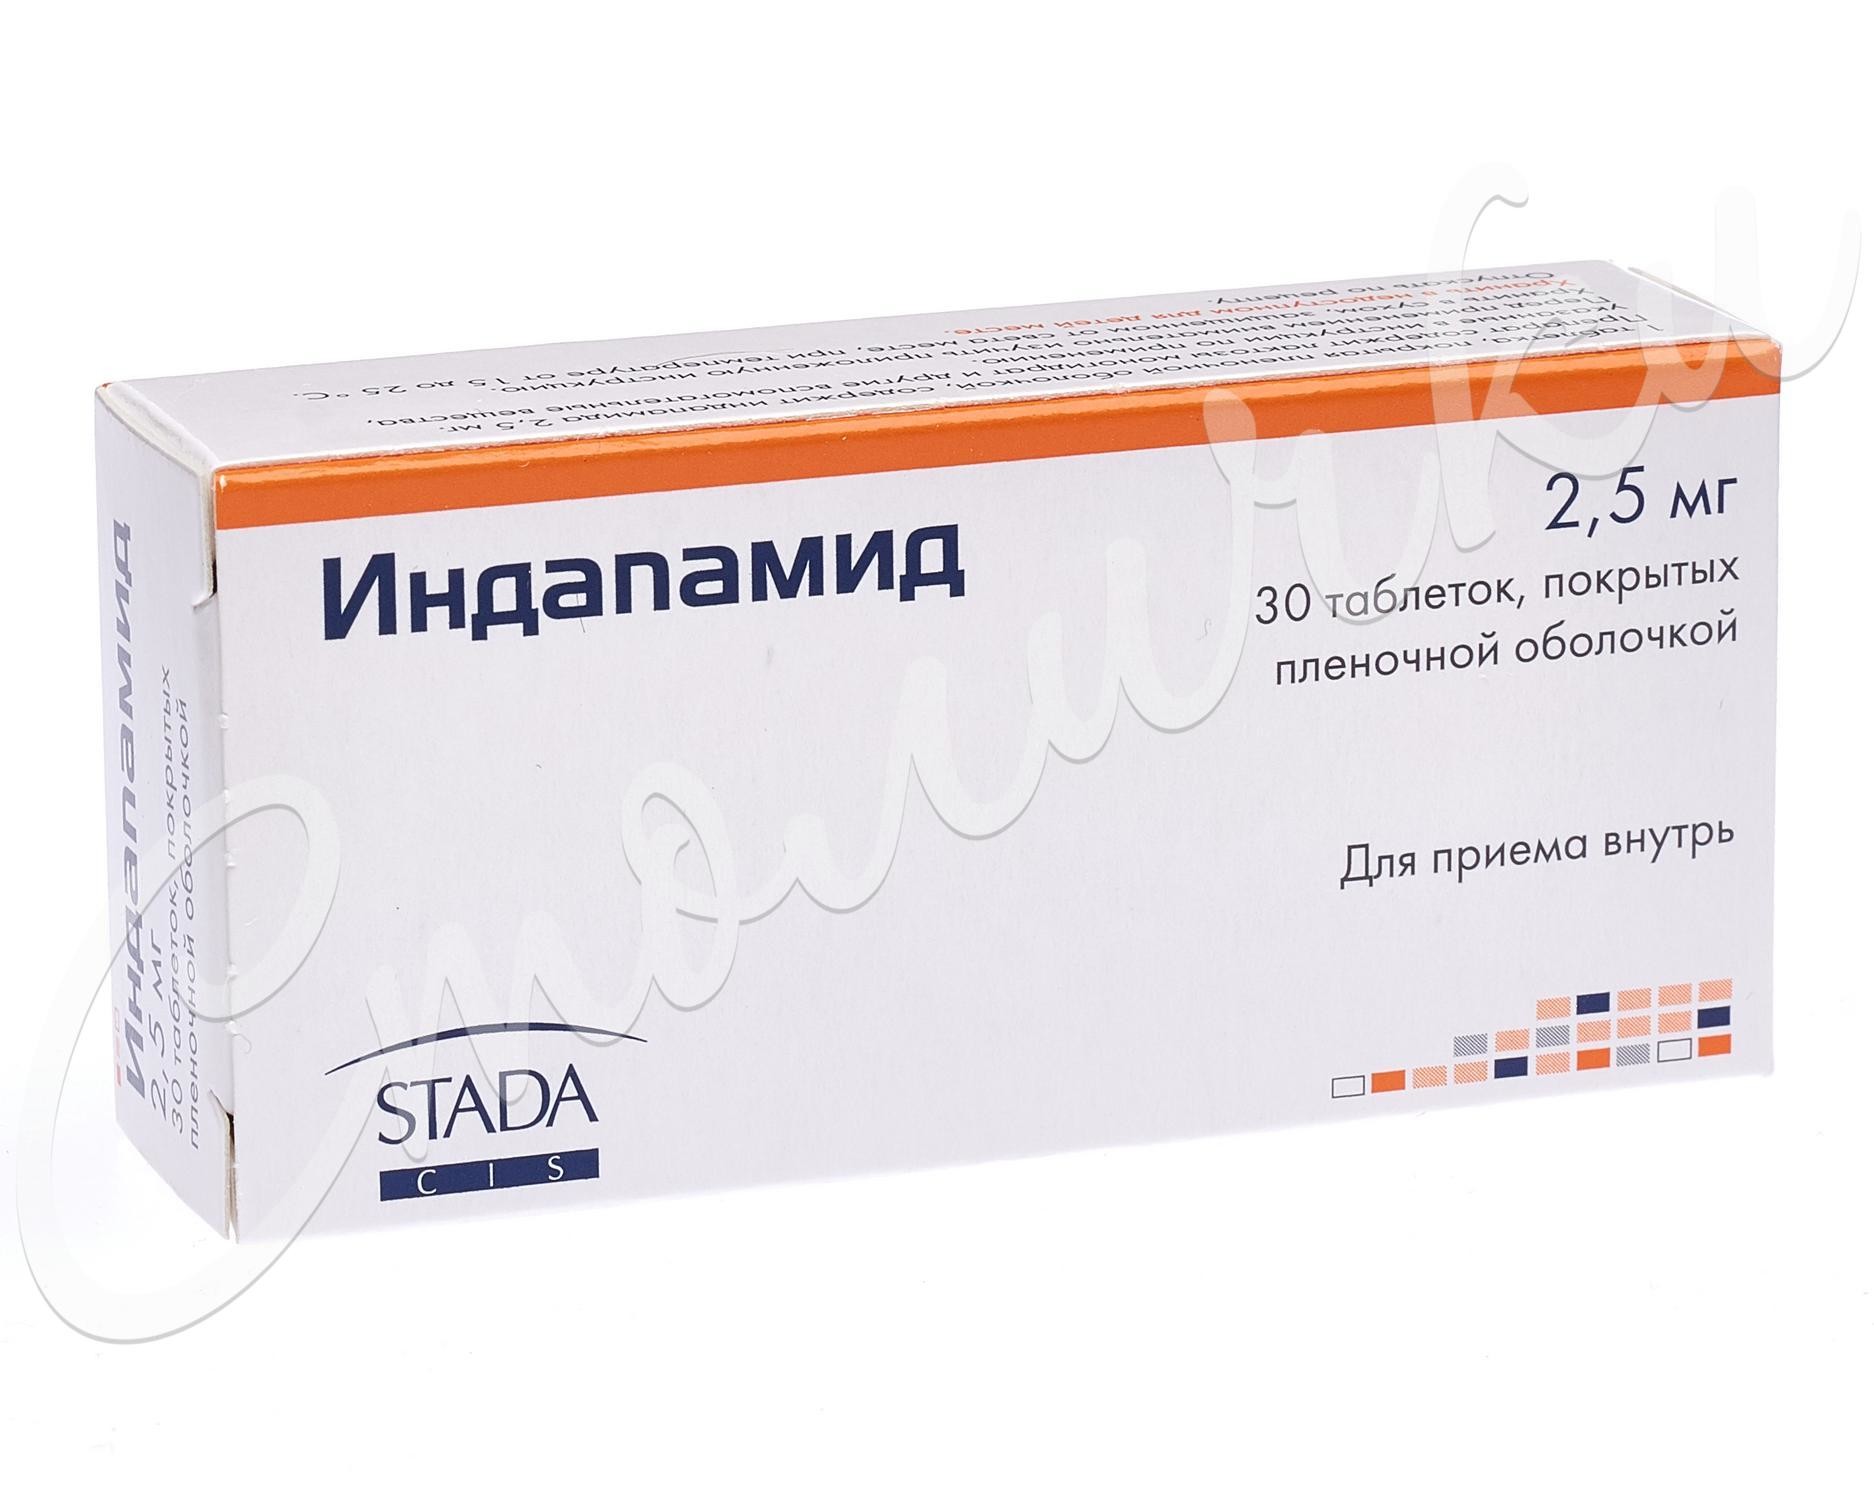 Купить индапамид 2.5 мг. Индапамид Сербия 2.5. Индапамид стада 2.5 мг. Индапамид 2,5 миллиграмма. Индапамид ретард Хемофарм.